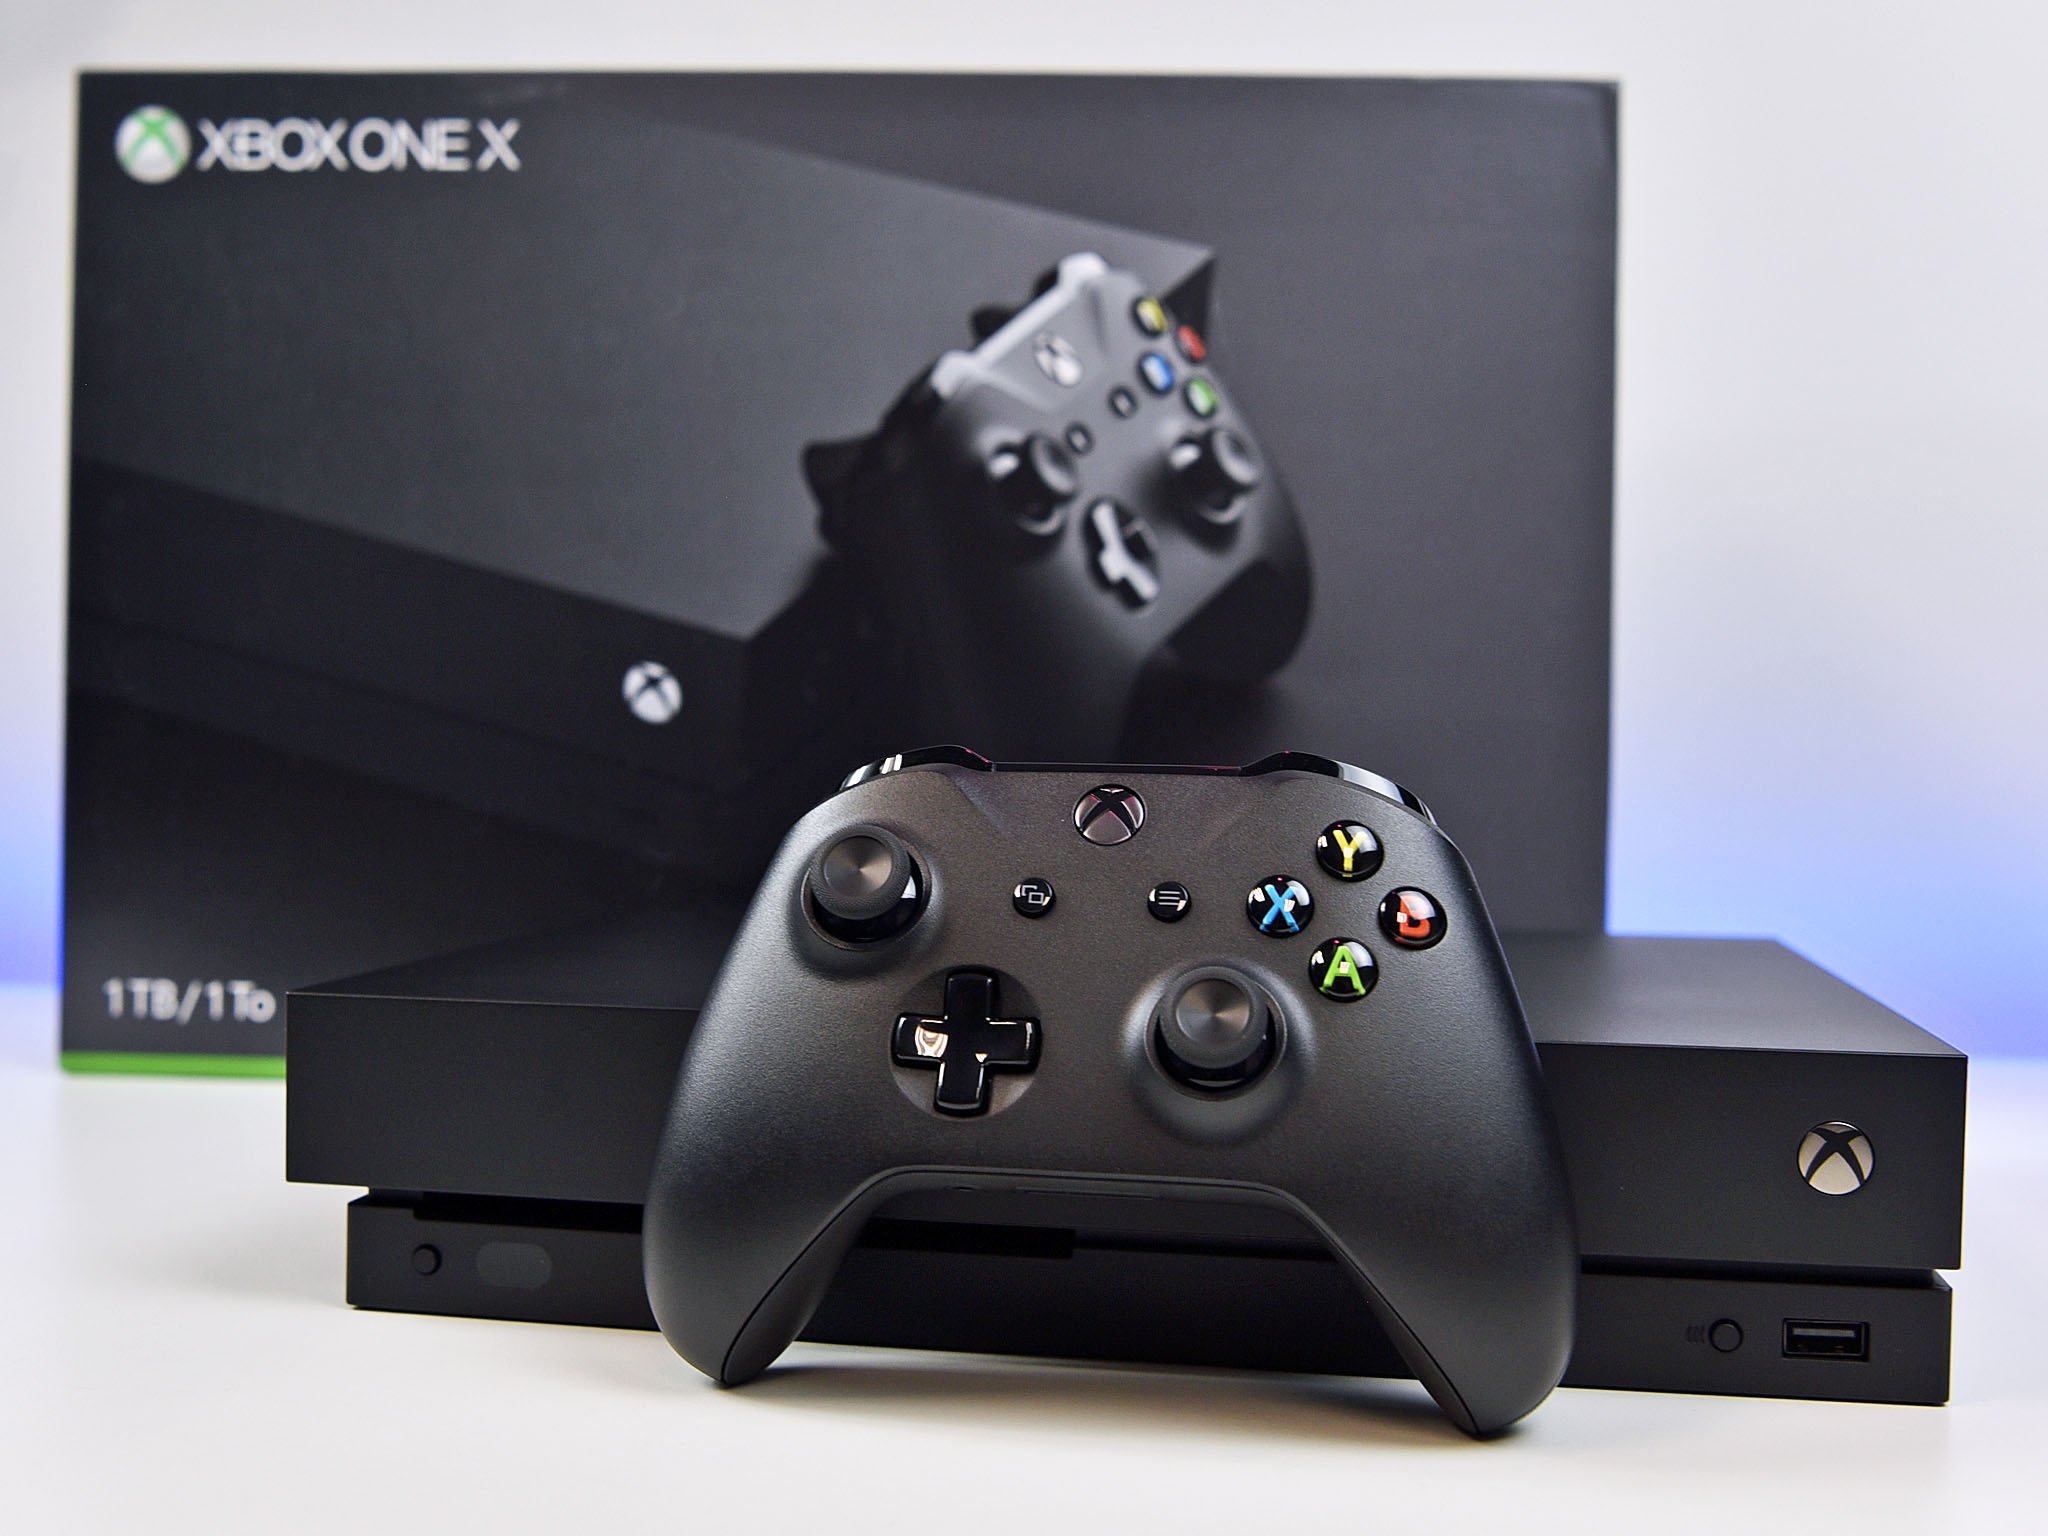 Xbox-One-X-hero-box-console_0_0.jpg